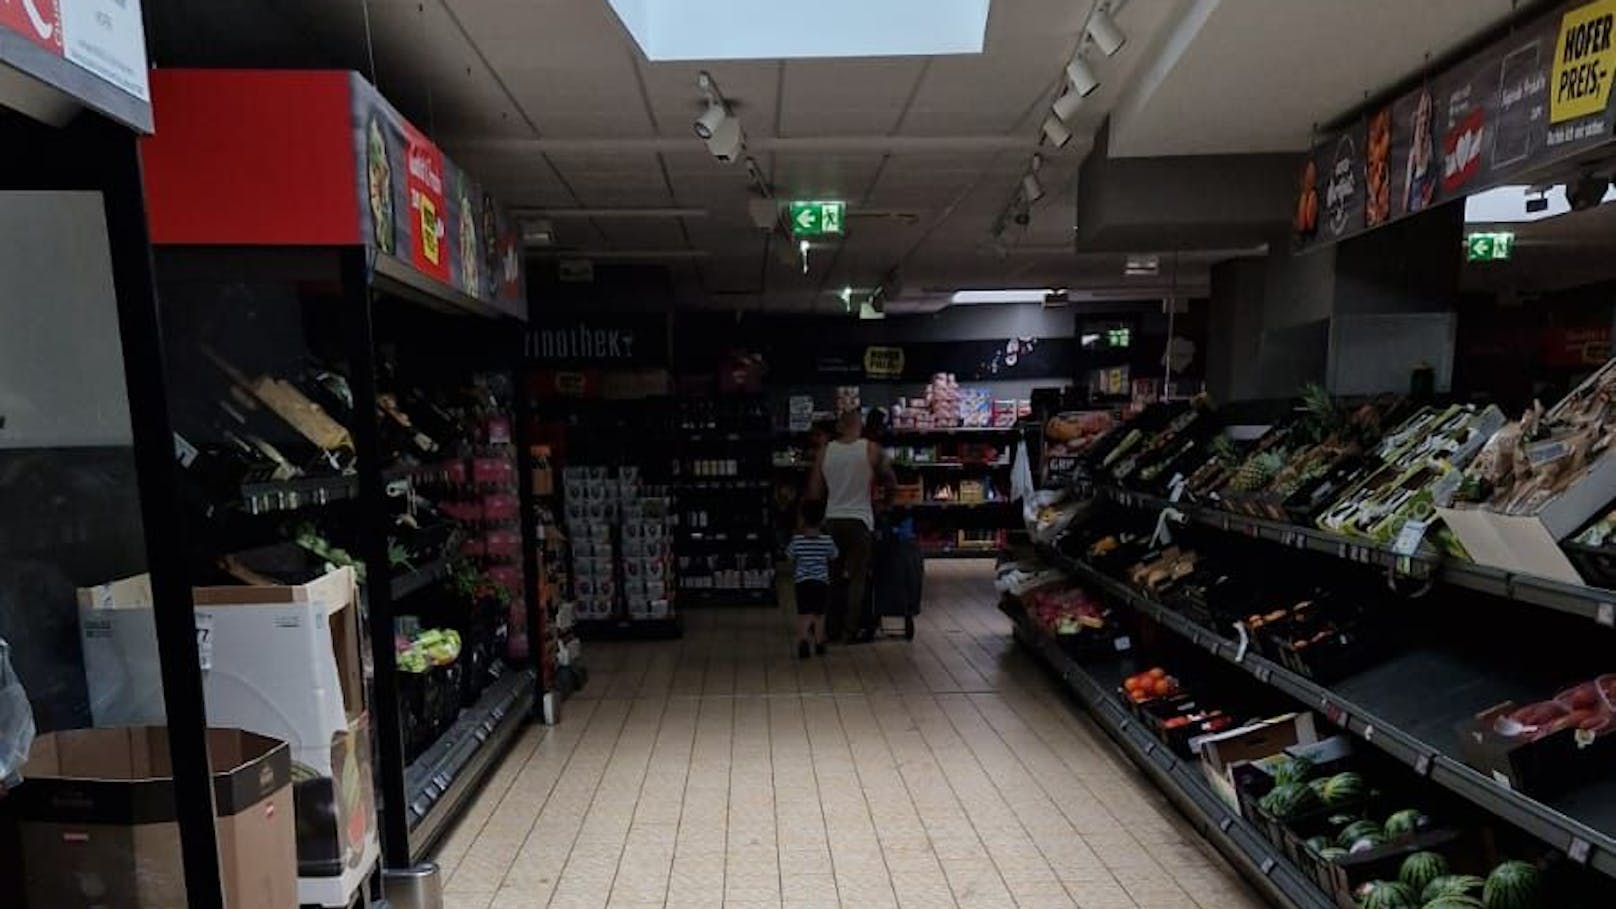 Geheimer Blackout-Plan für Supermärkte enthüllt